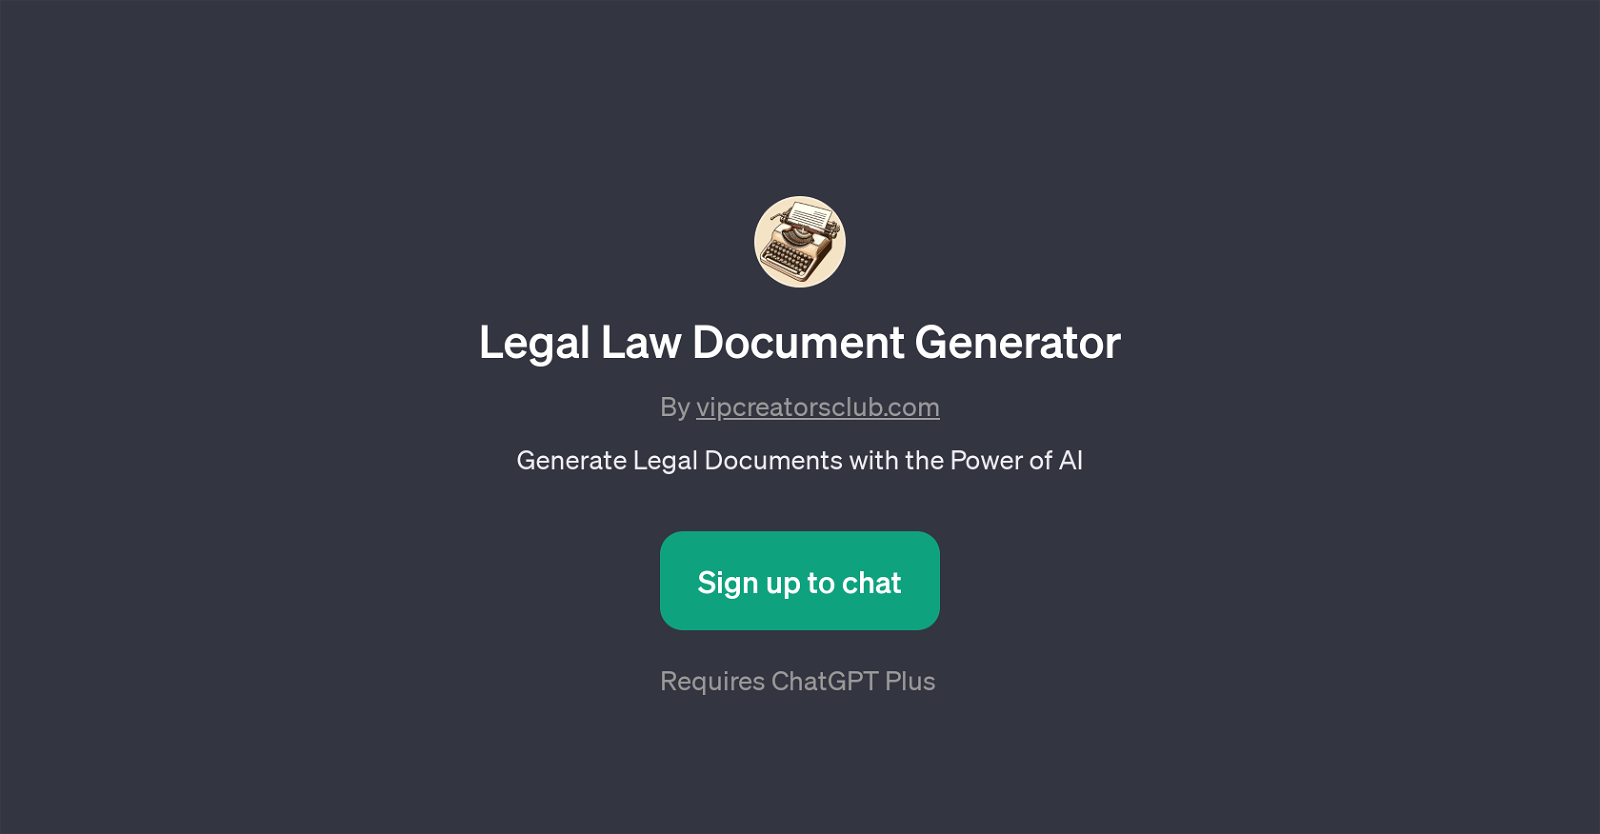 Legal Law Document Generator website